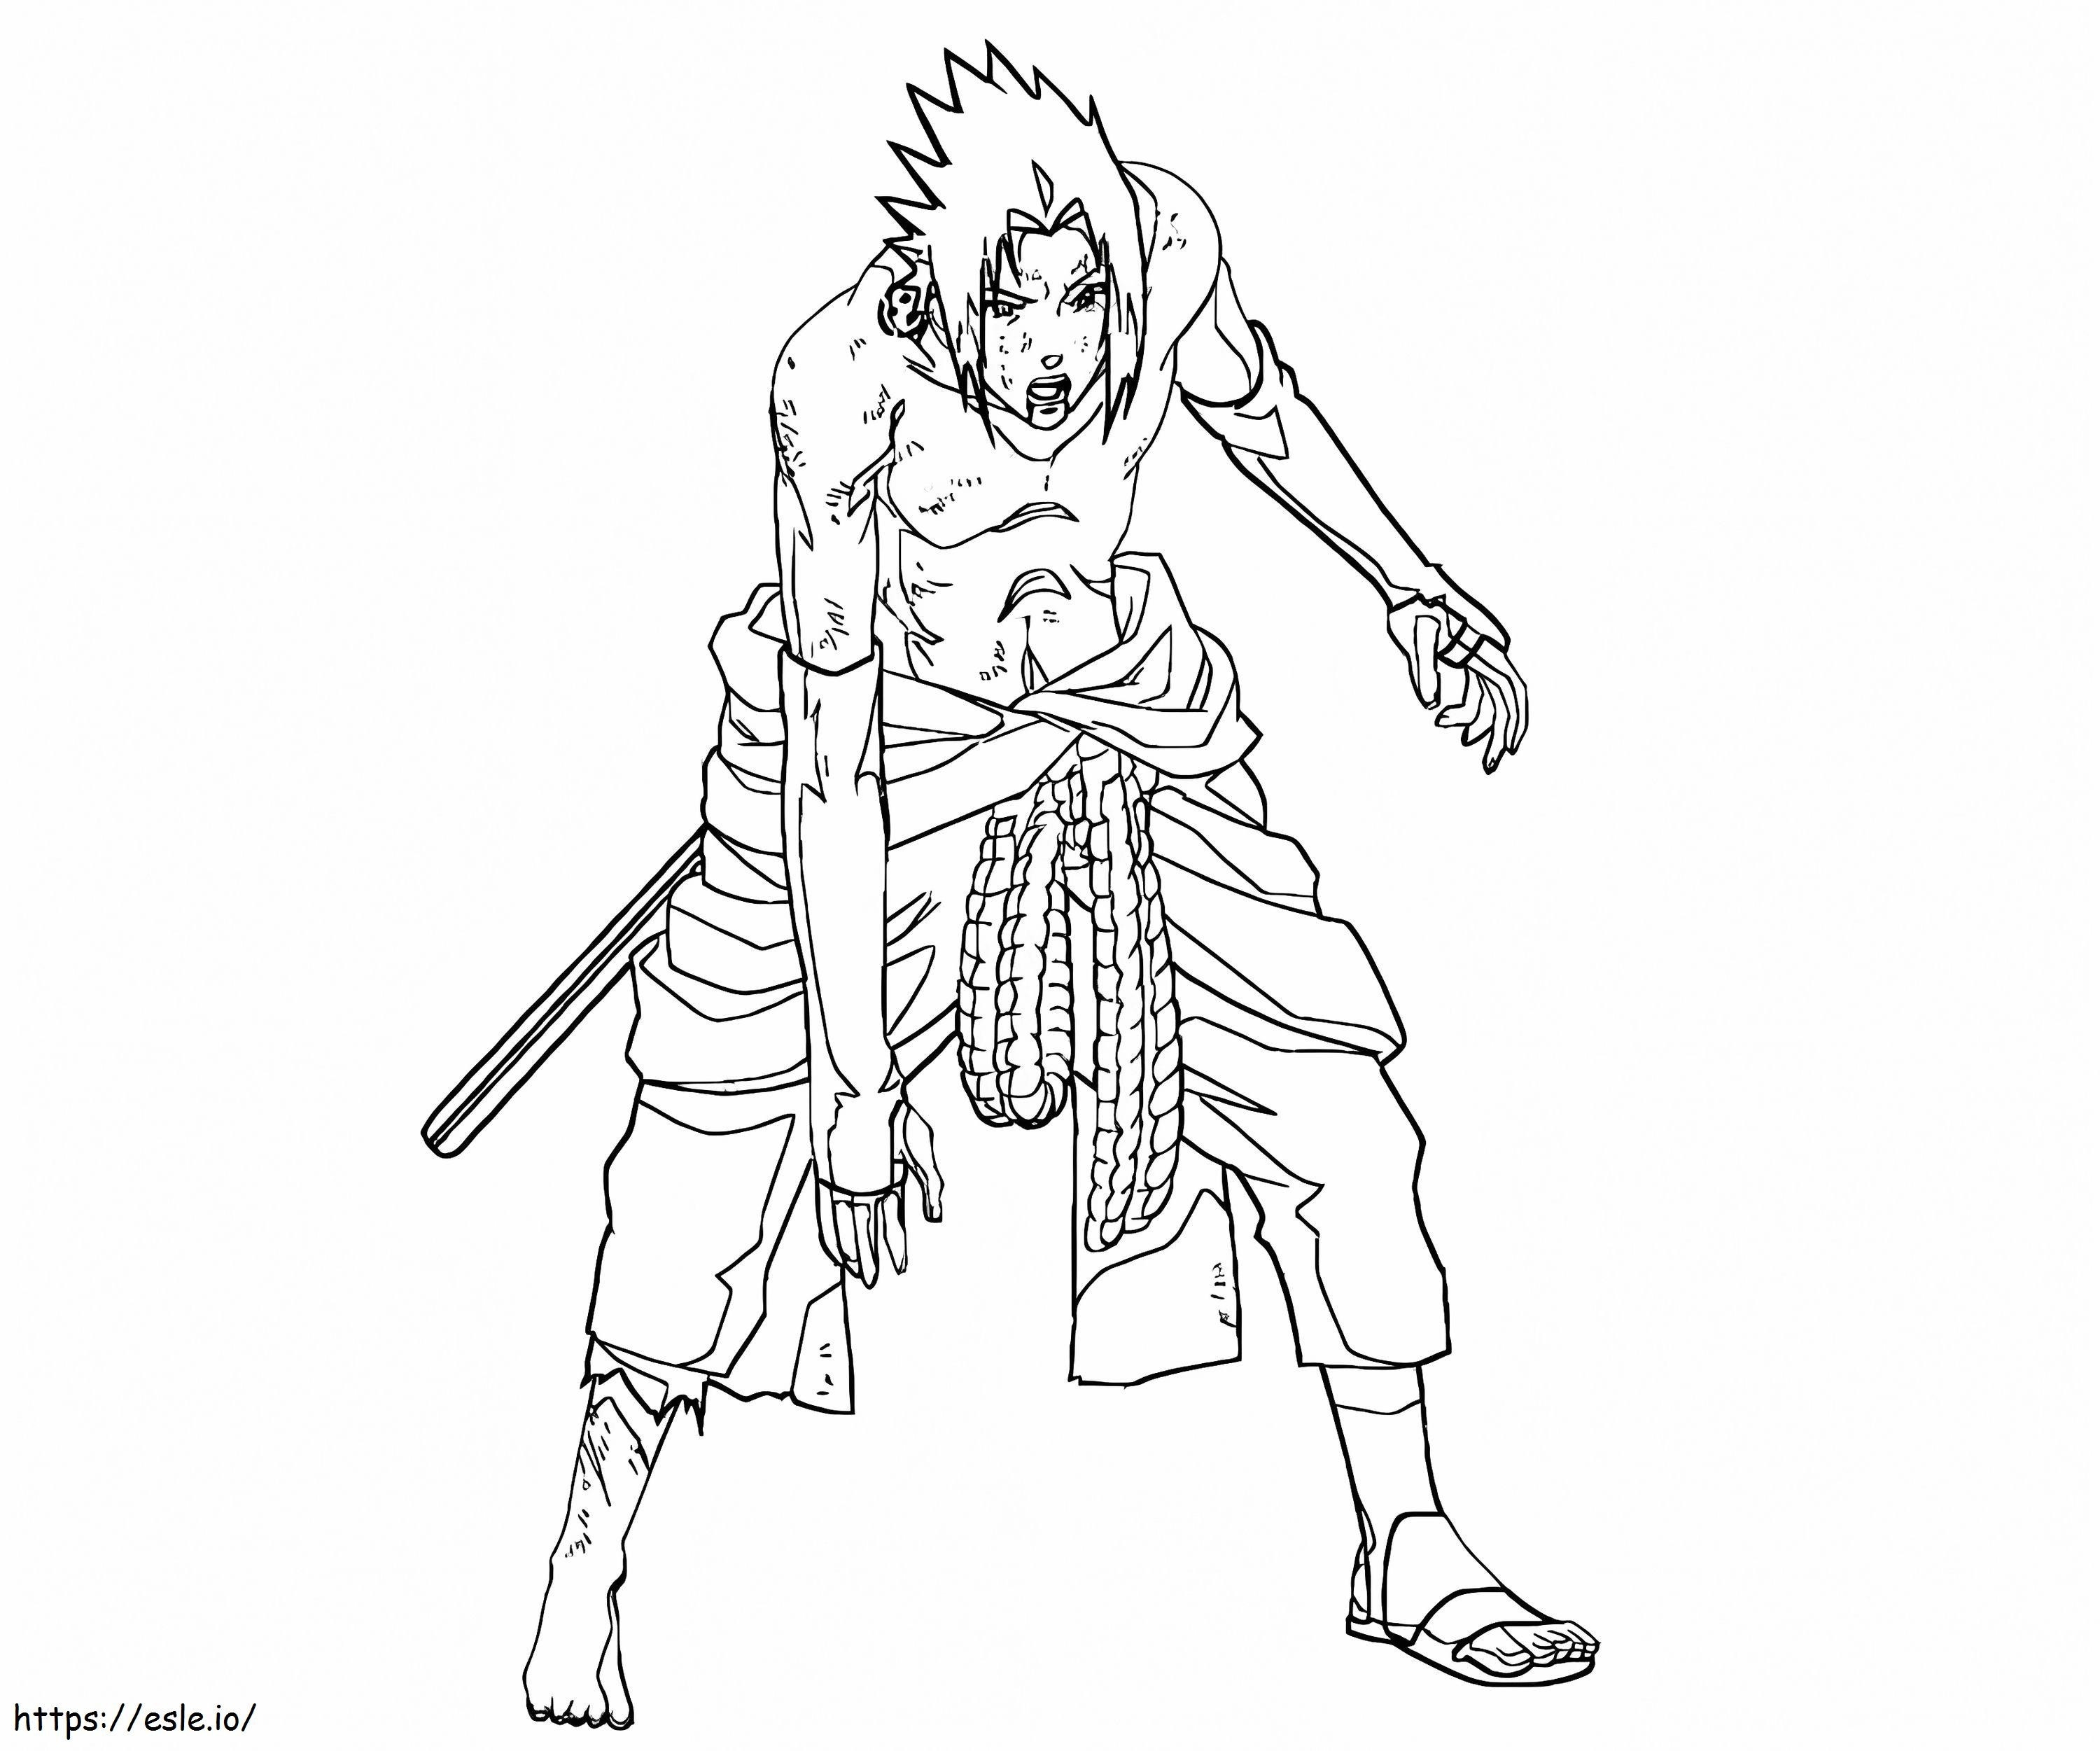 Normal Uchiha Sasuke coloring page